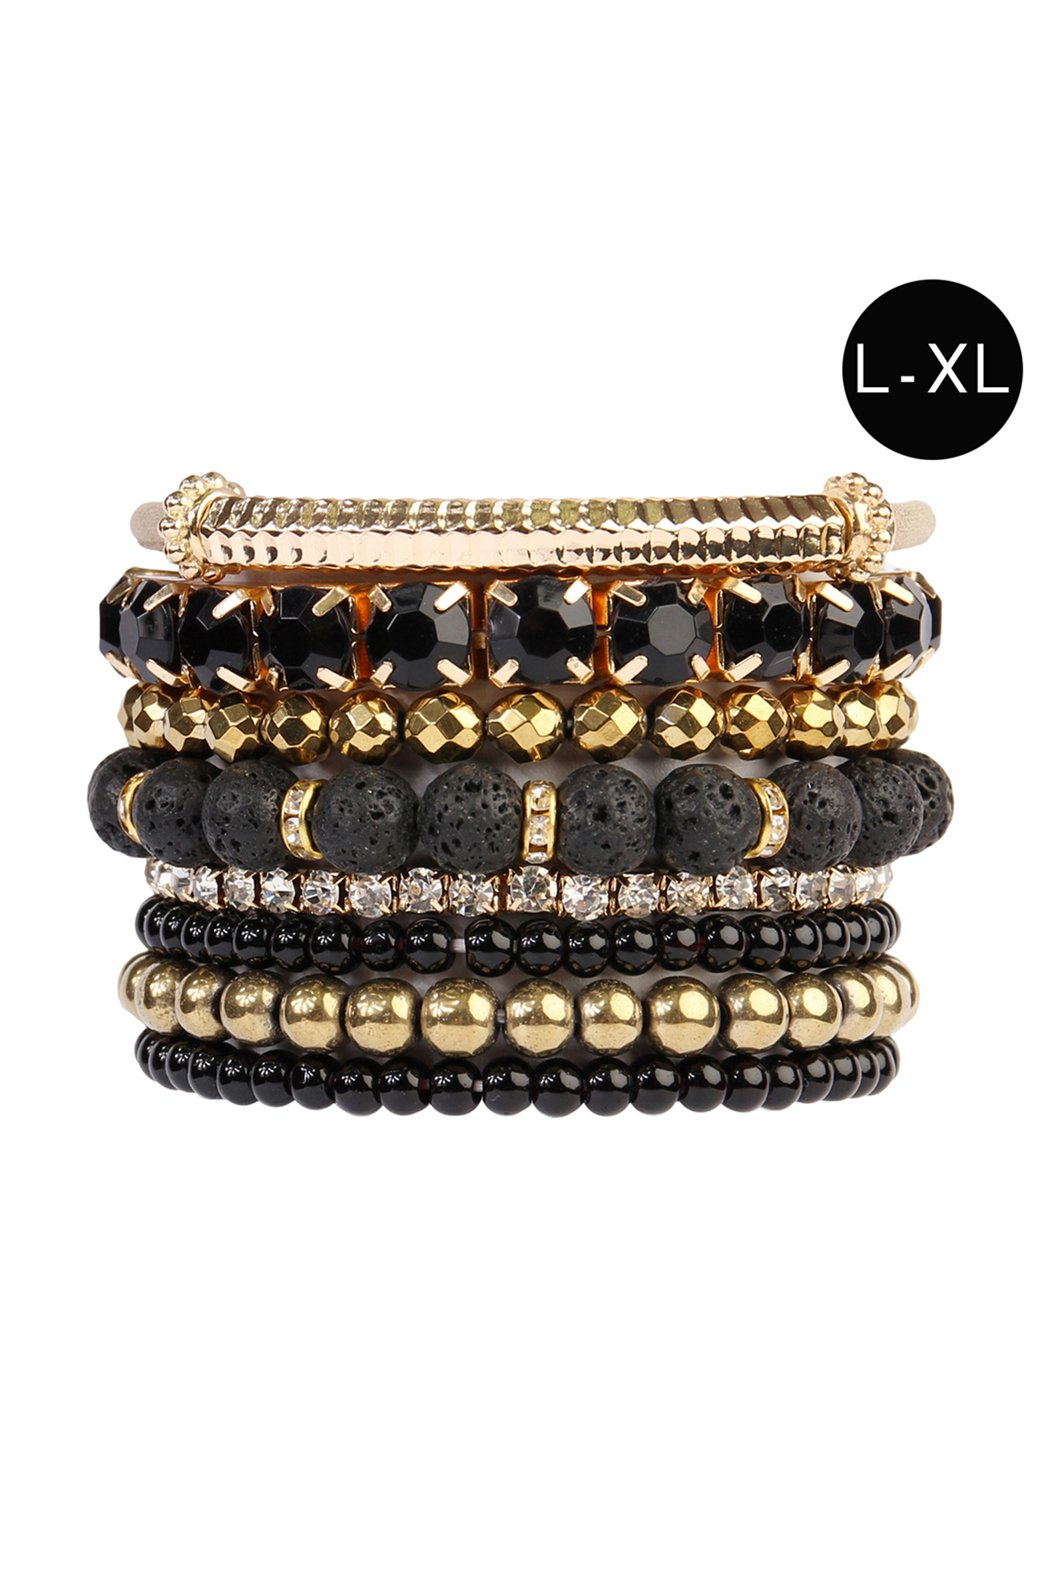 Hdb2220 - Mixed Beads Charm Bracelet L-Xl - LOLA LUXE